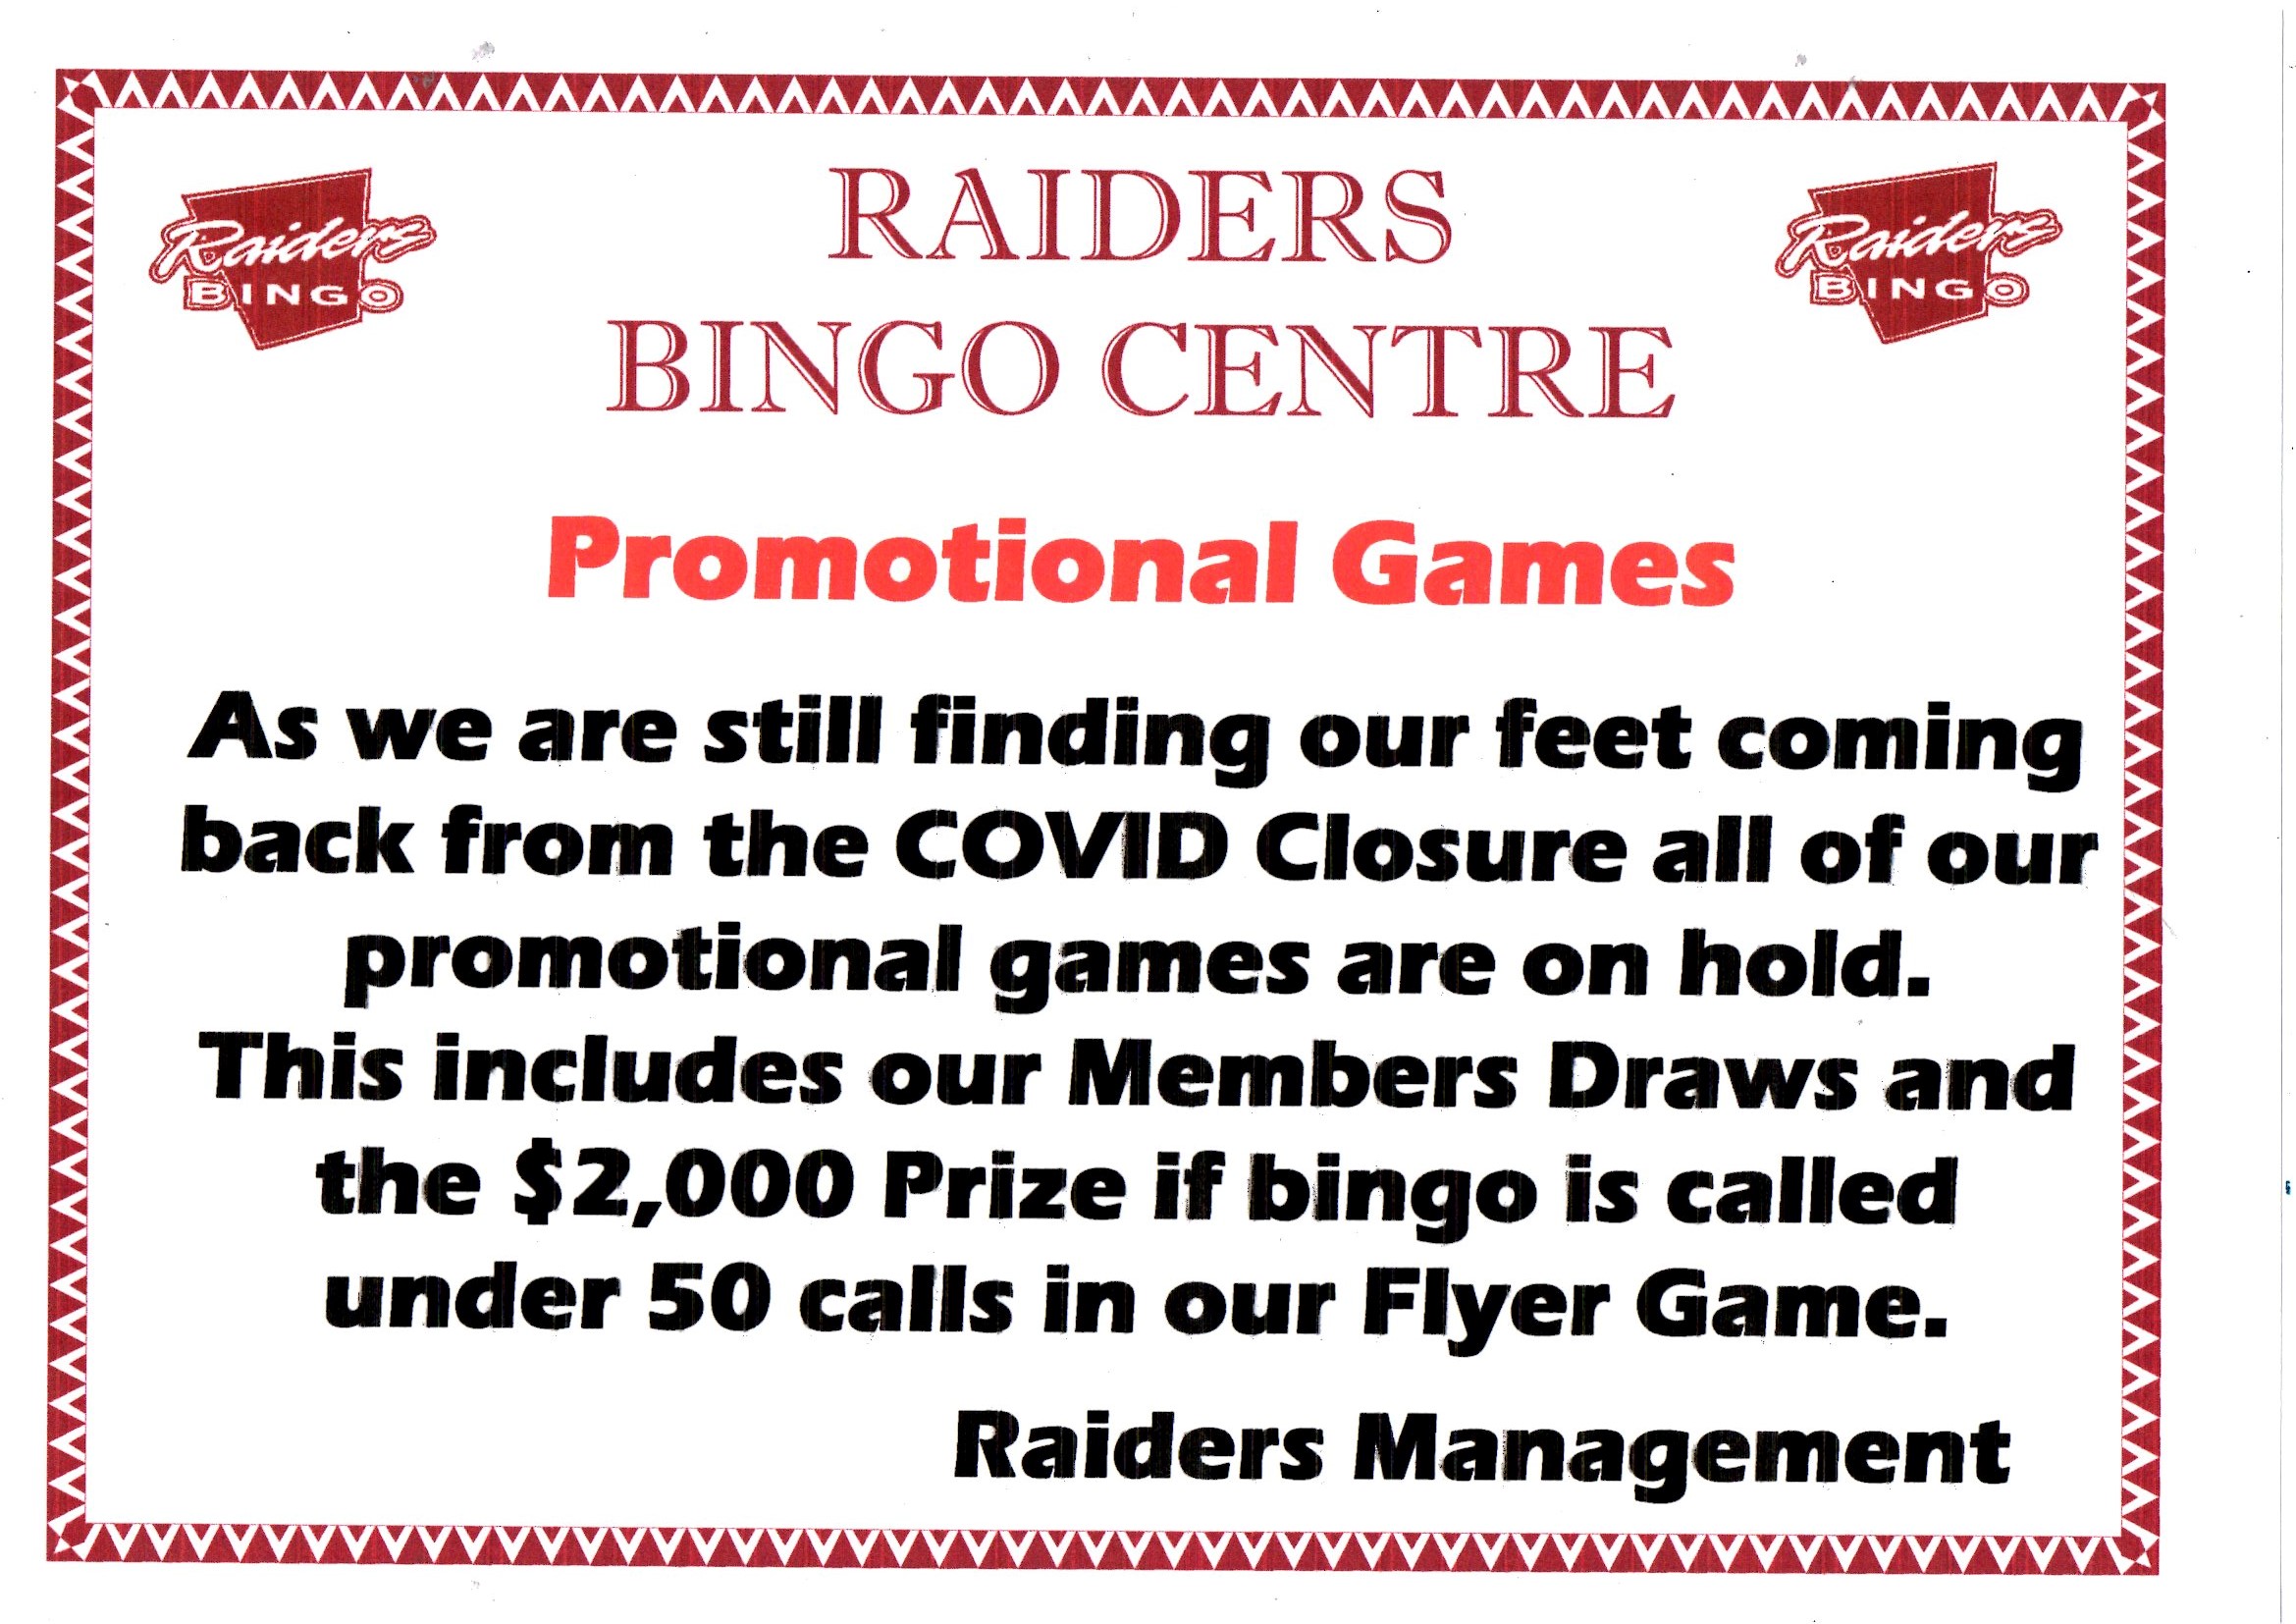 Raiders Bingo News